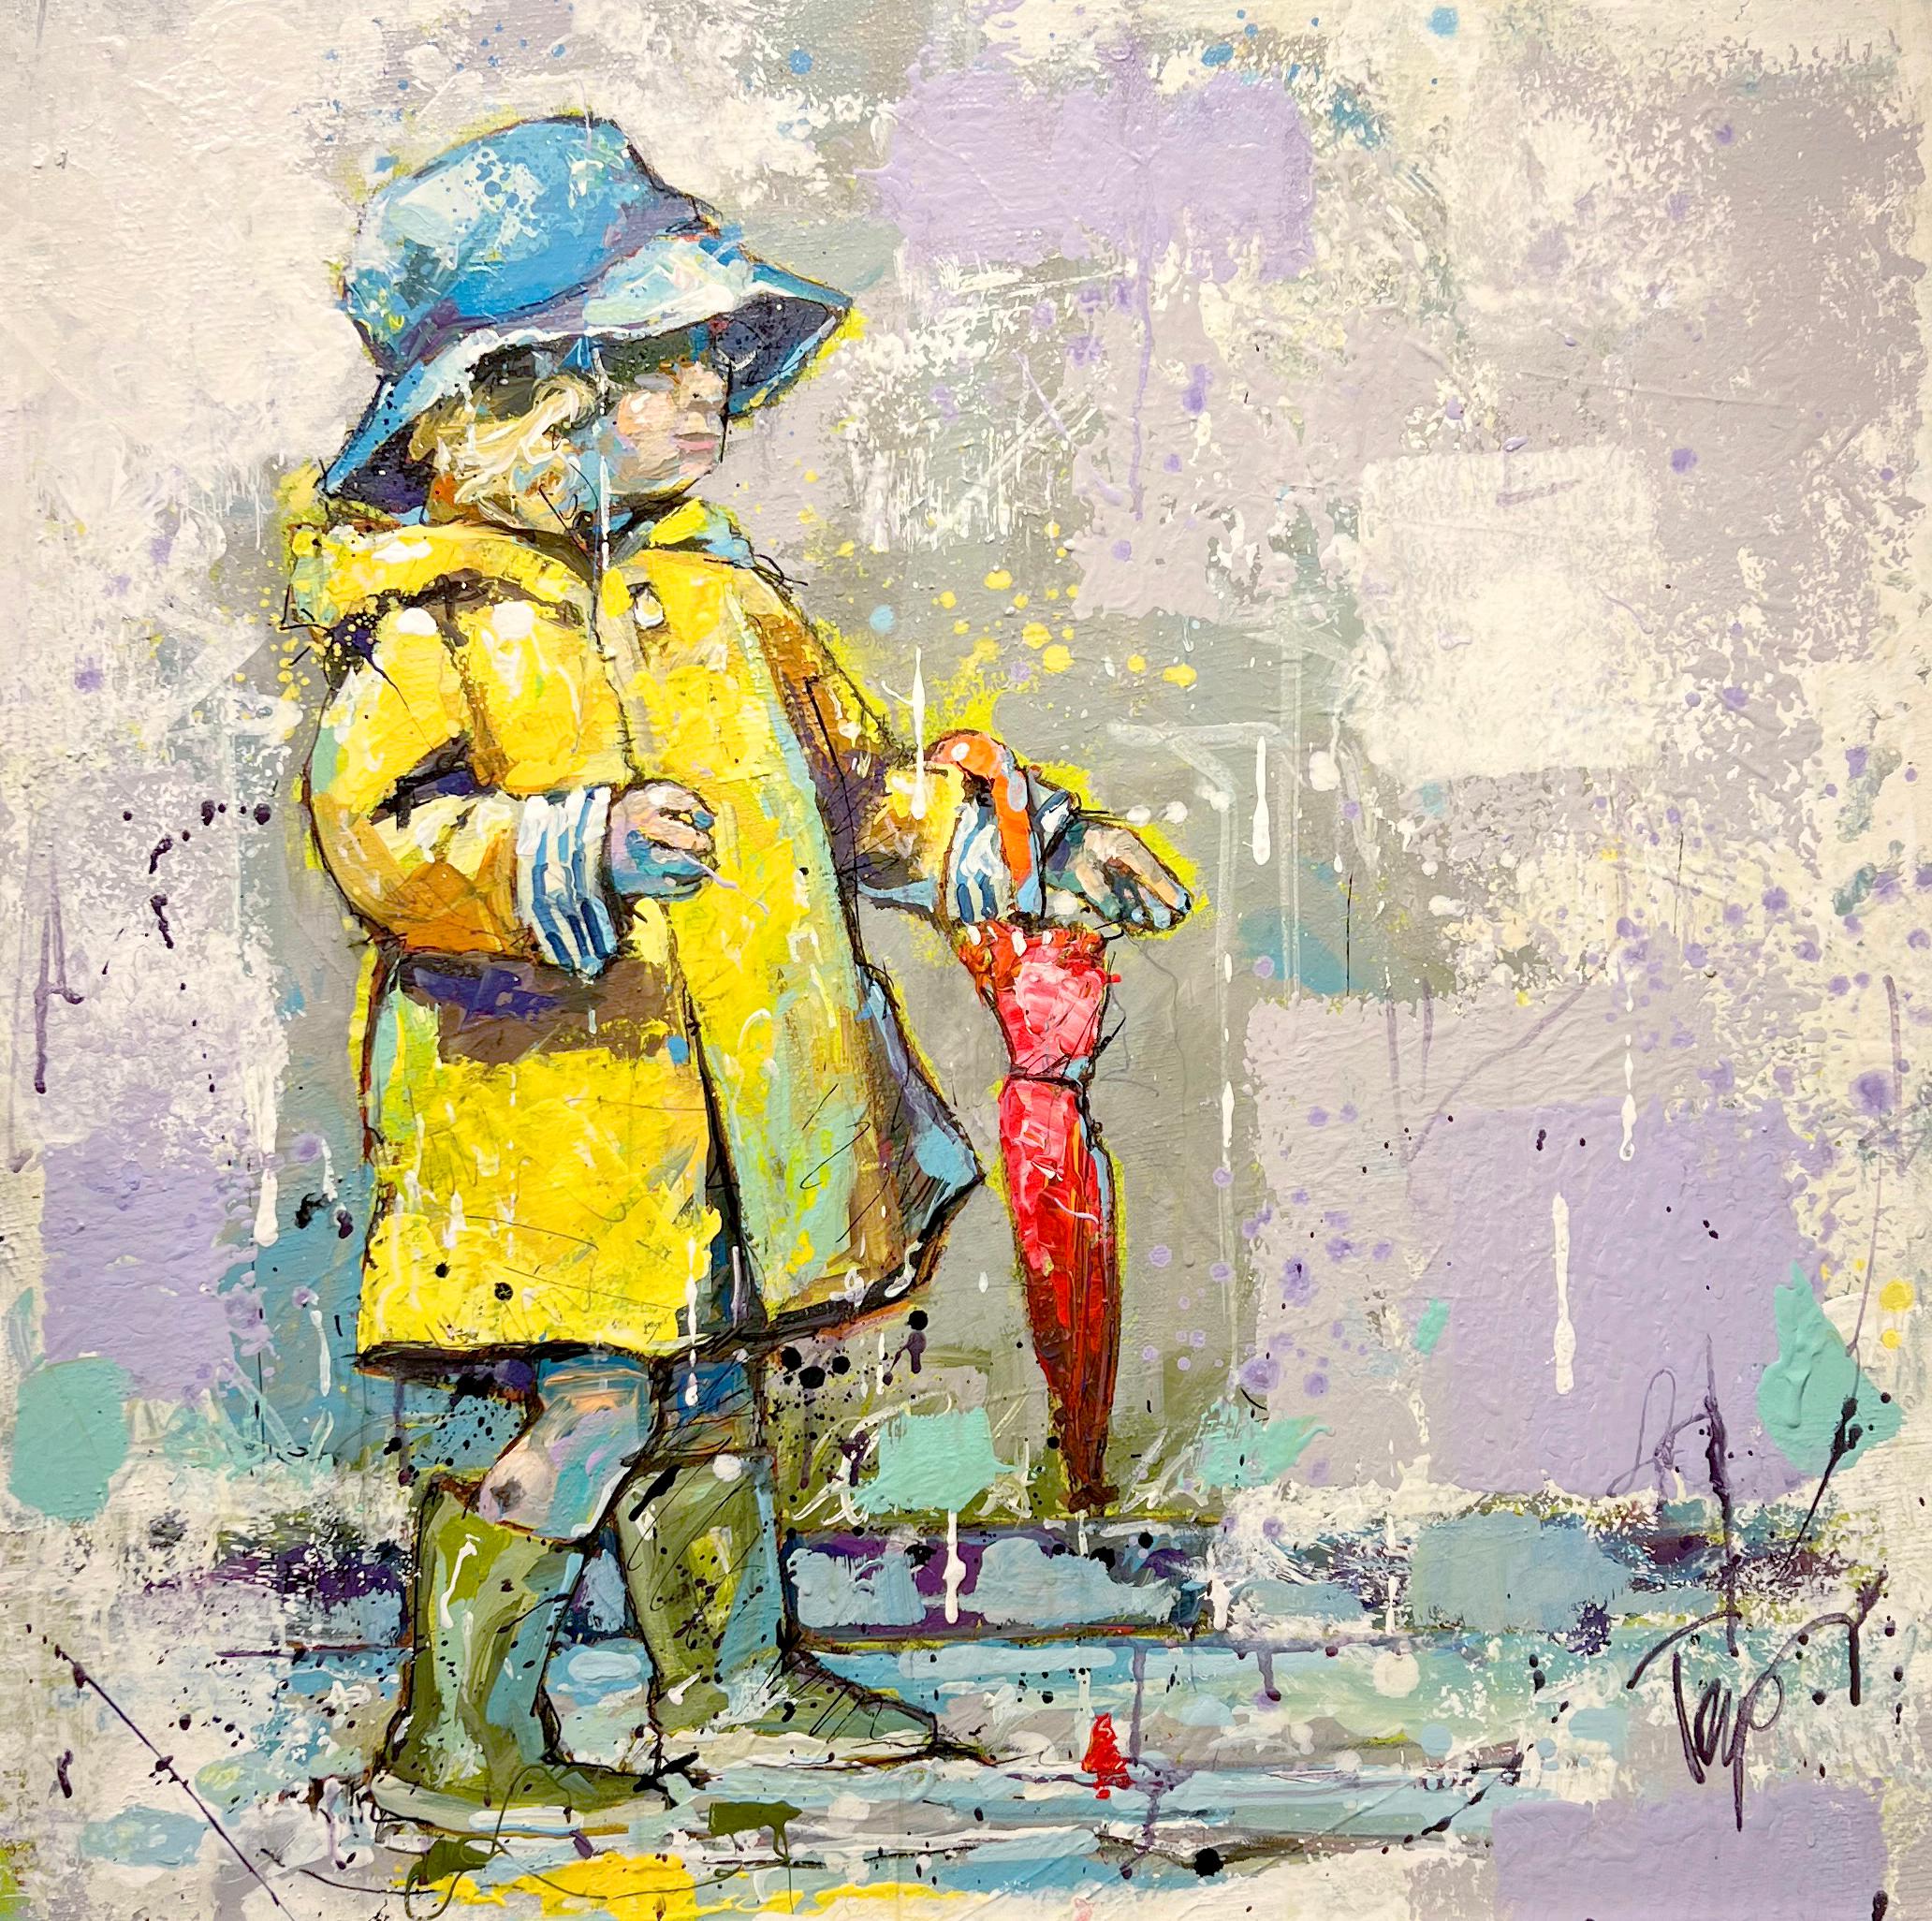 Trip Park, "Raining Again", 30x30 Child with Raincoat and Umbrella Oil Painting